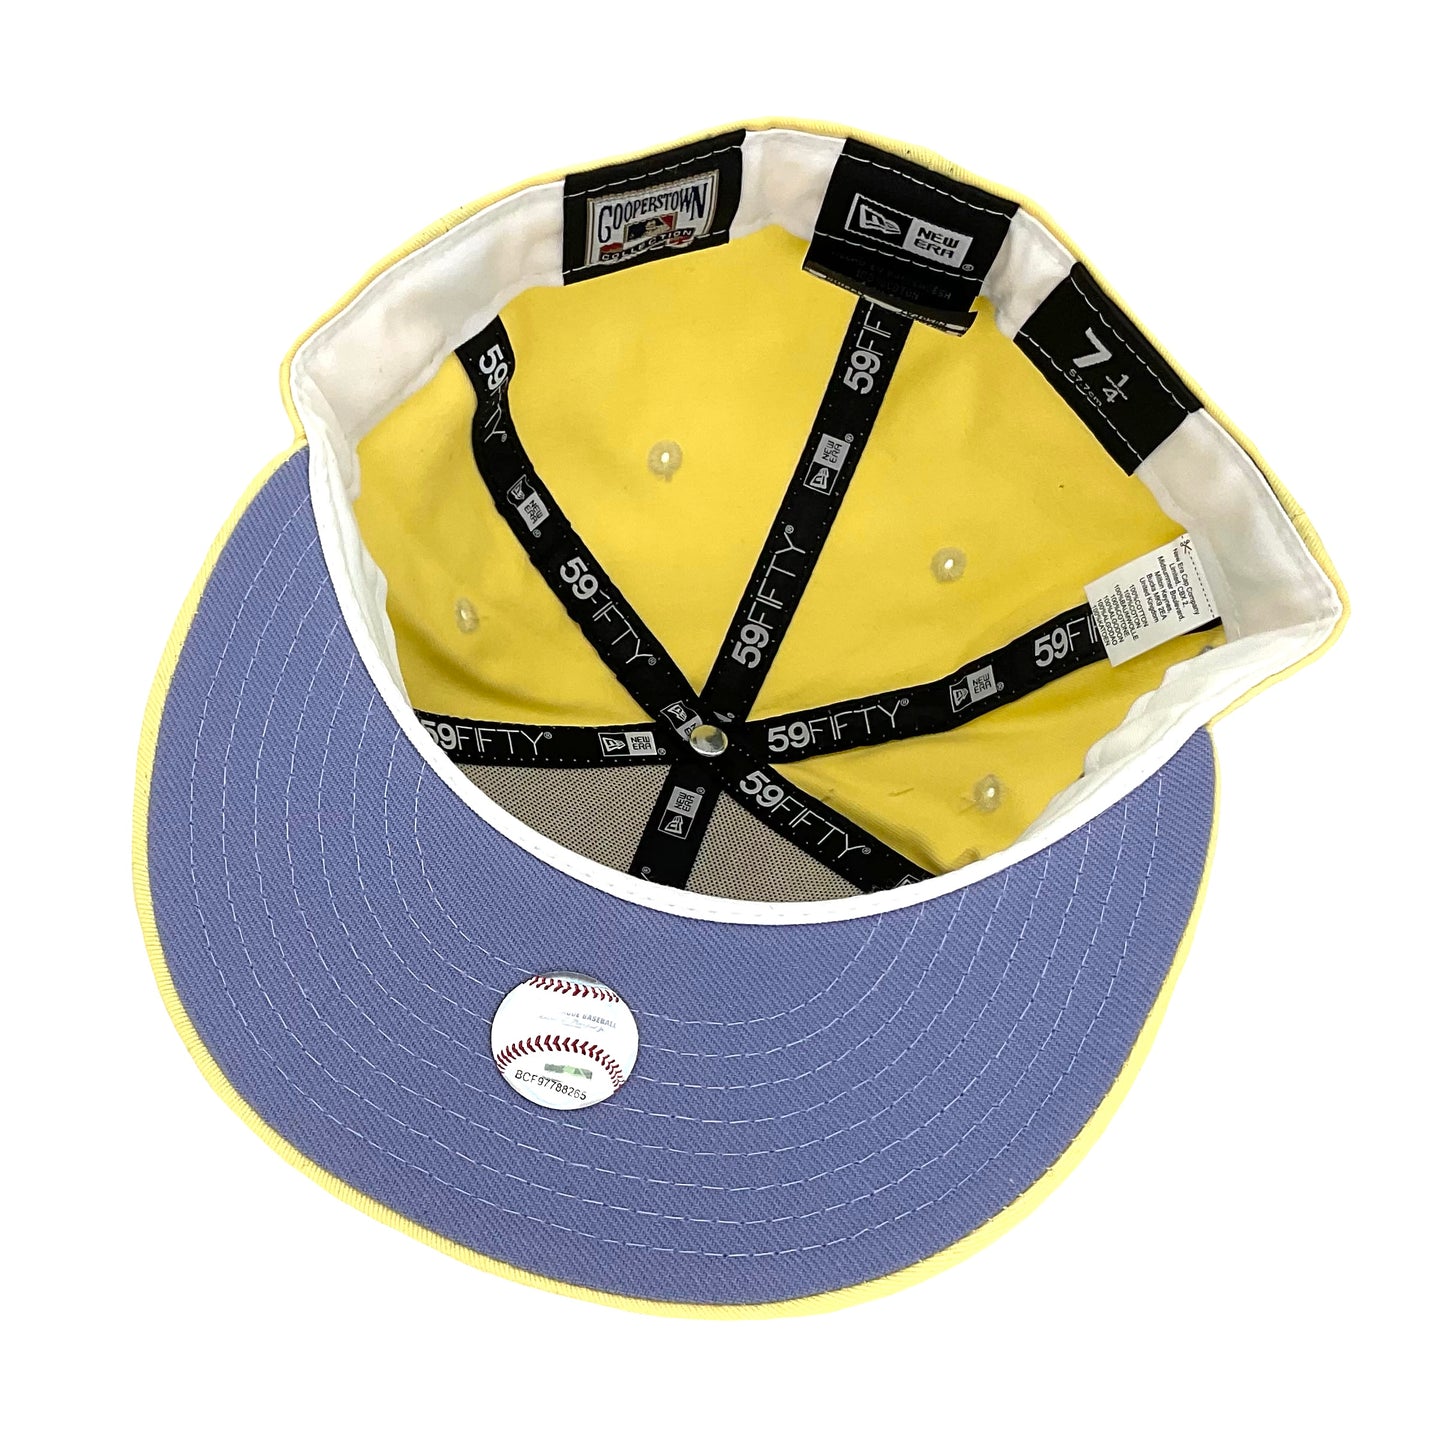 New York Yankees Custom New Era Cap Yellow Lavender 99